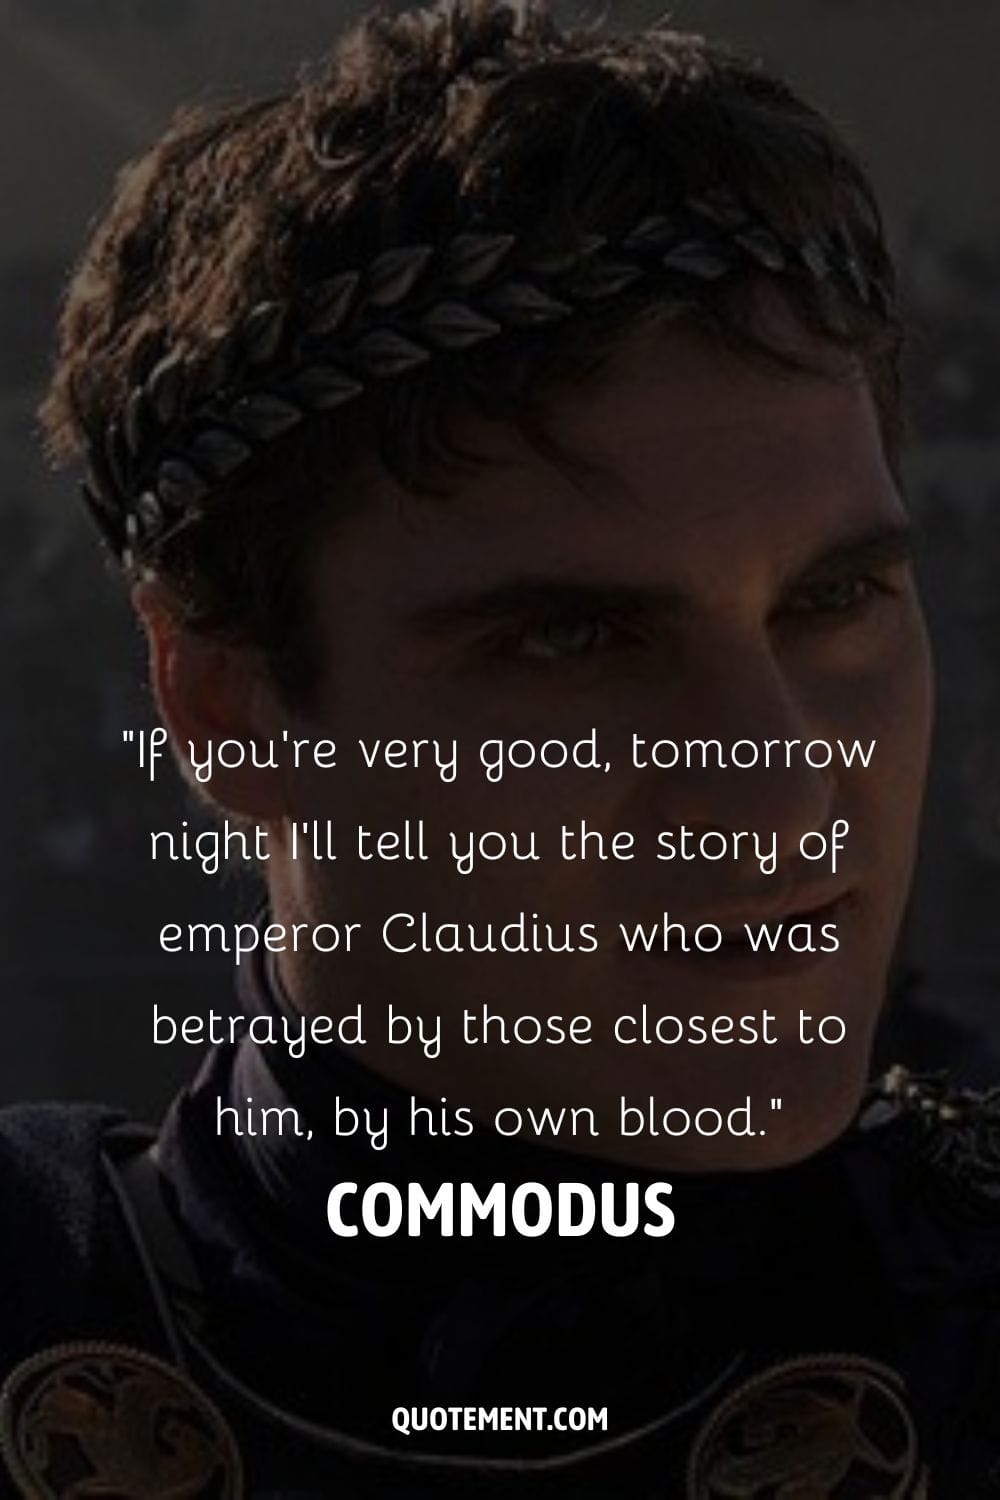 Commodus, the treacherous villain in Gladiator film.